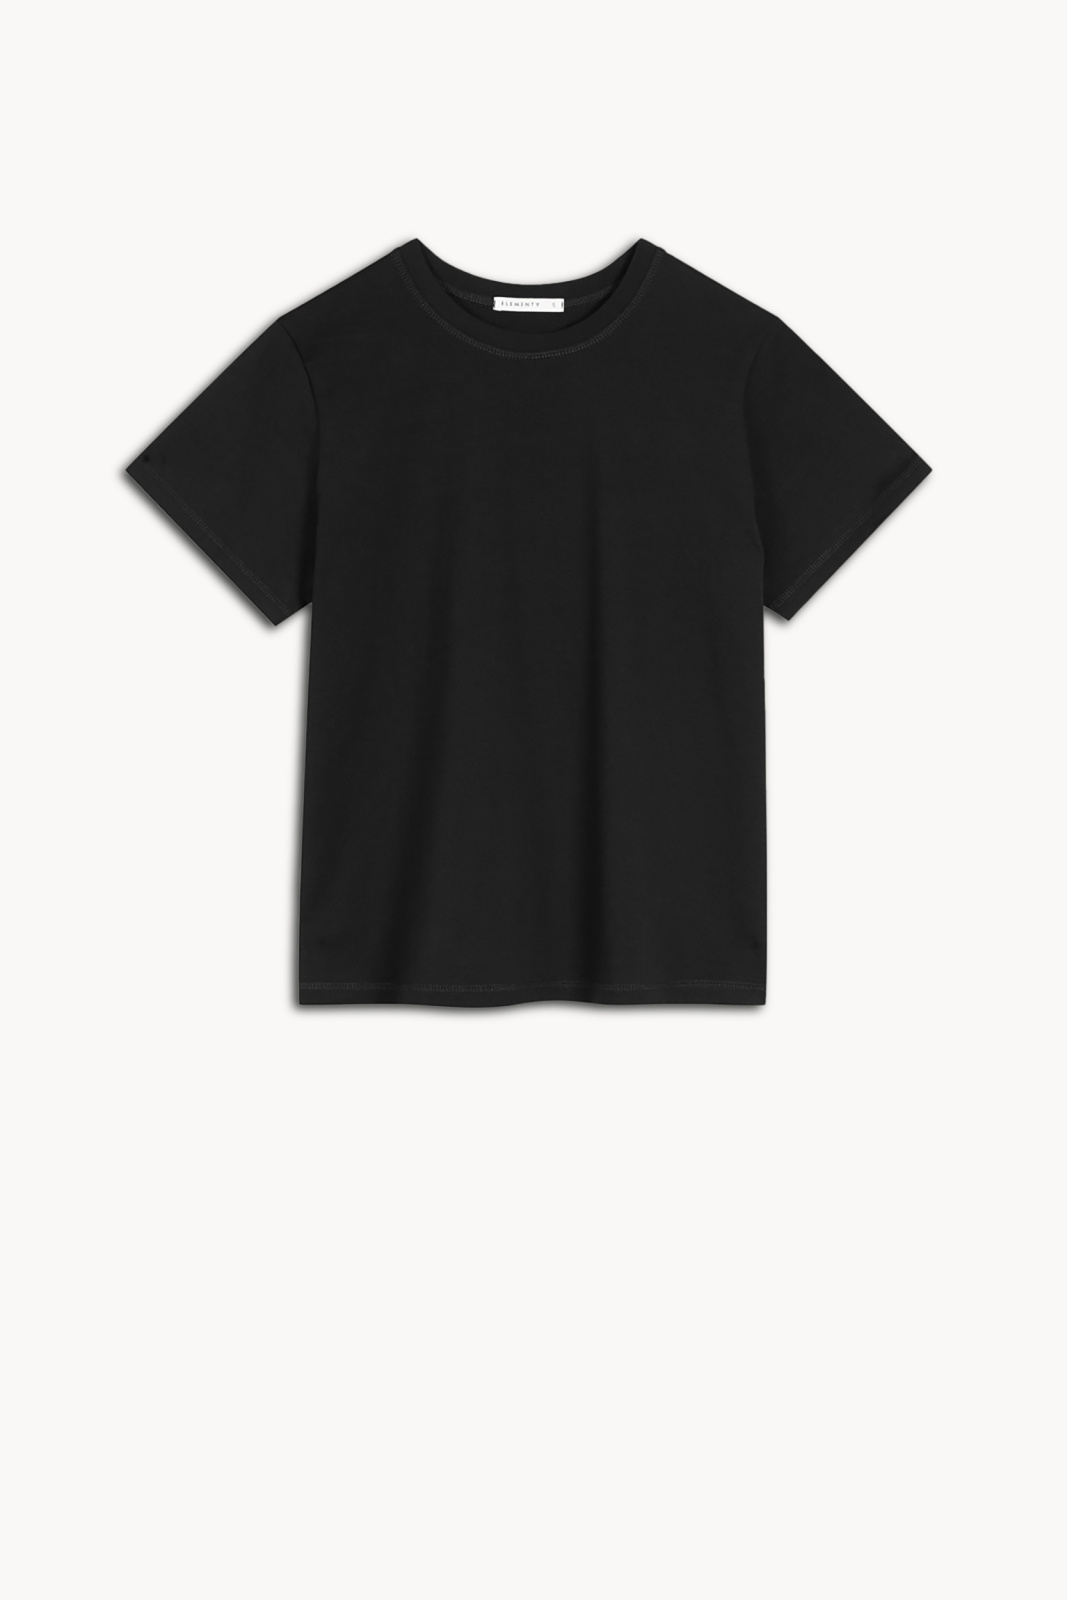 Bas T-shirt Black 3 for 2 Elementy